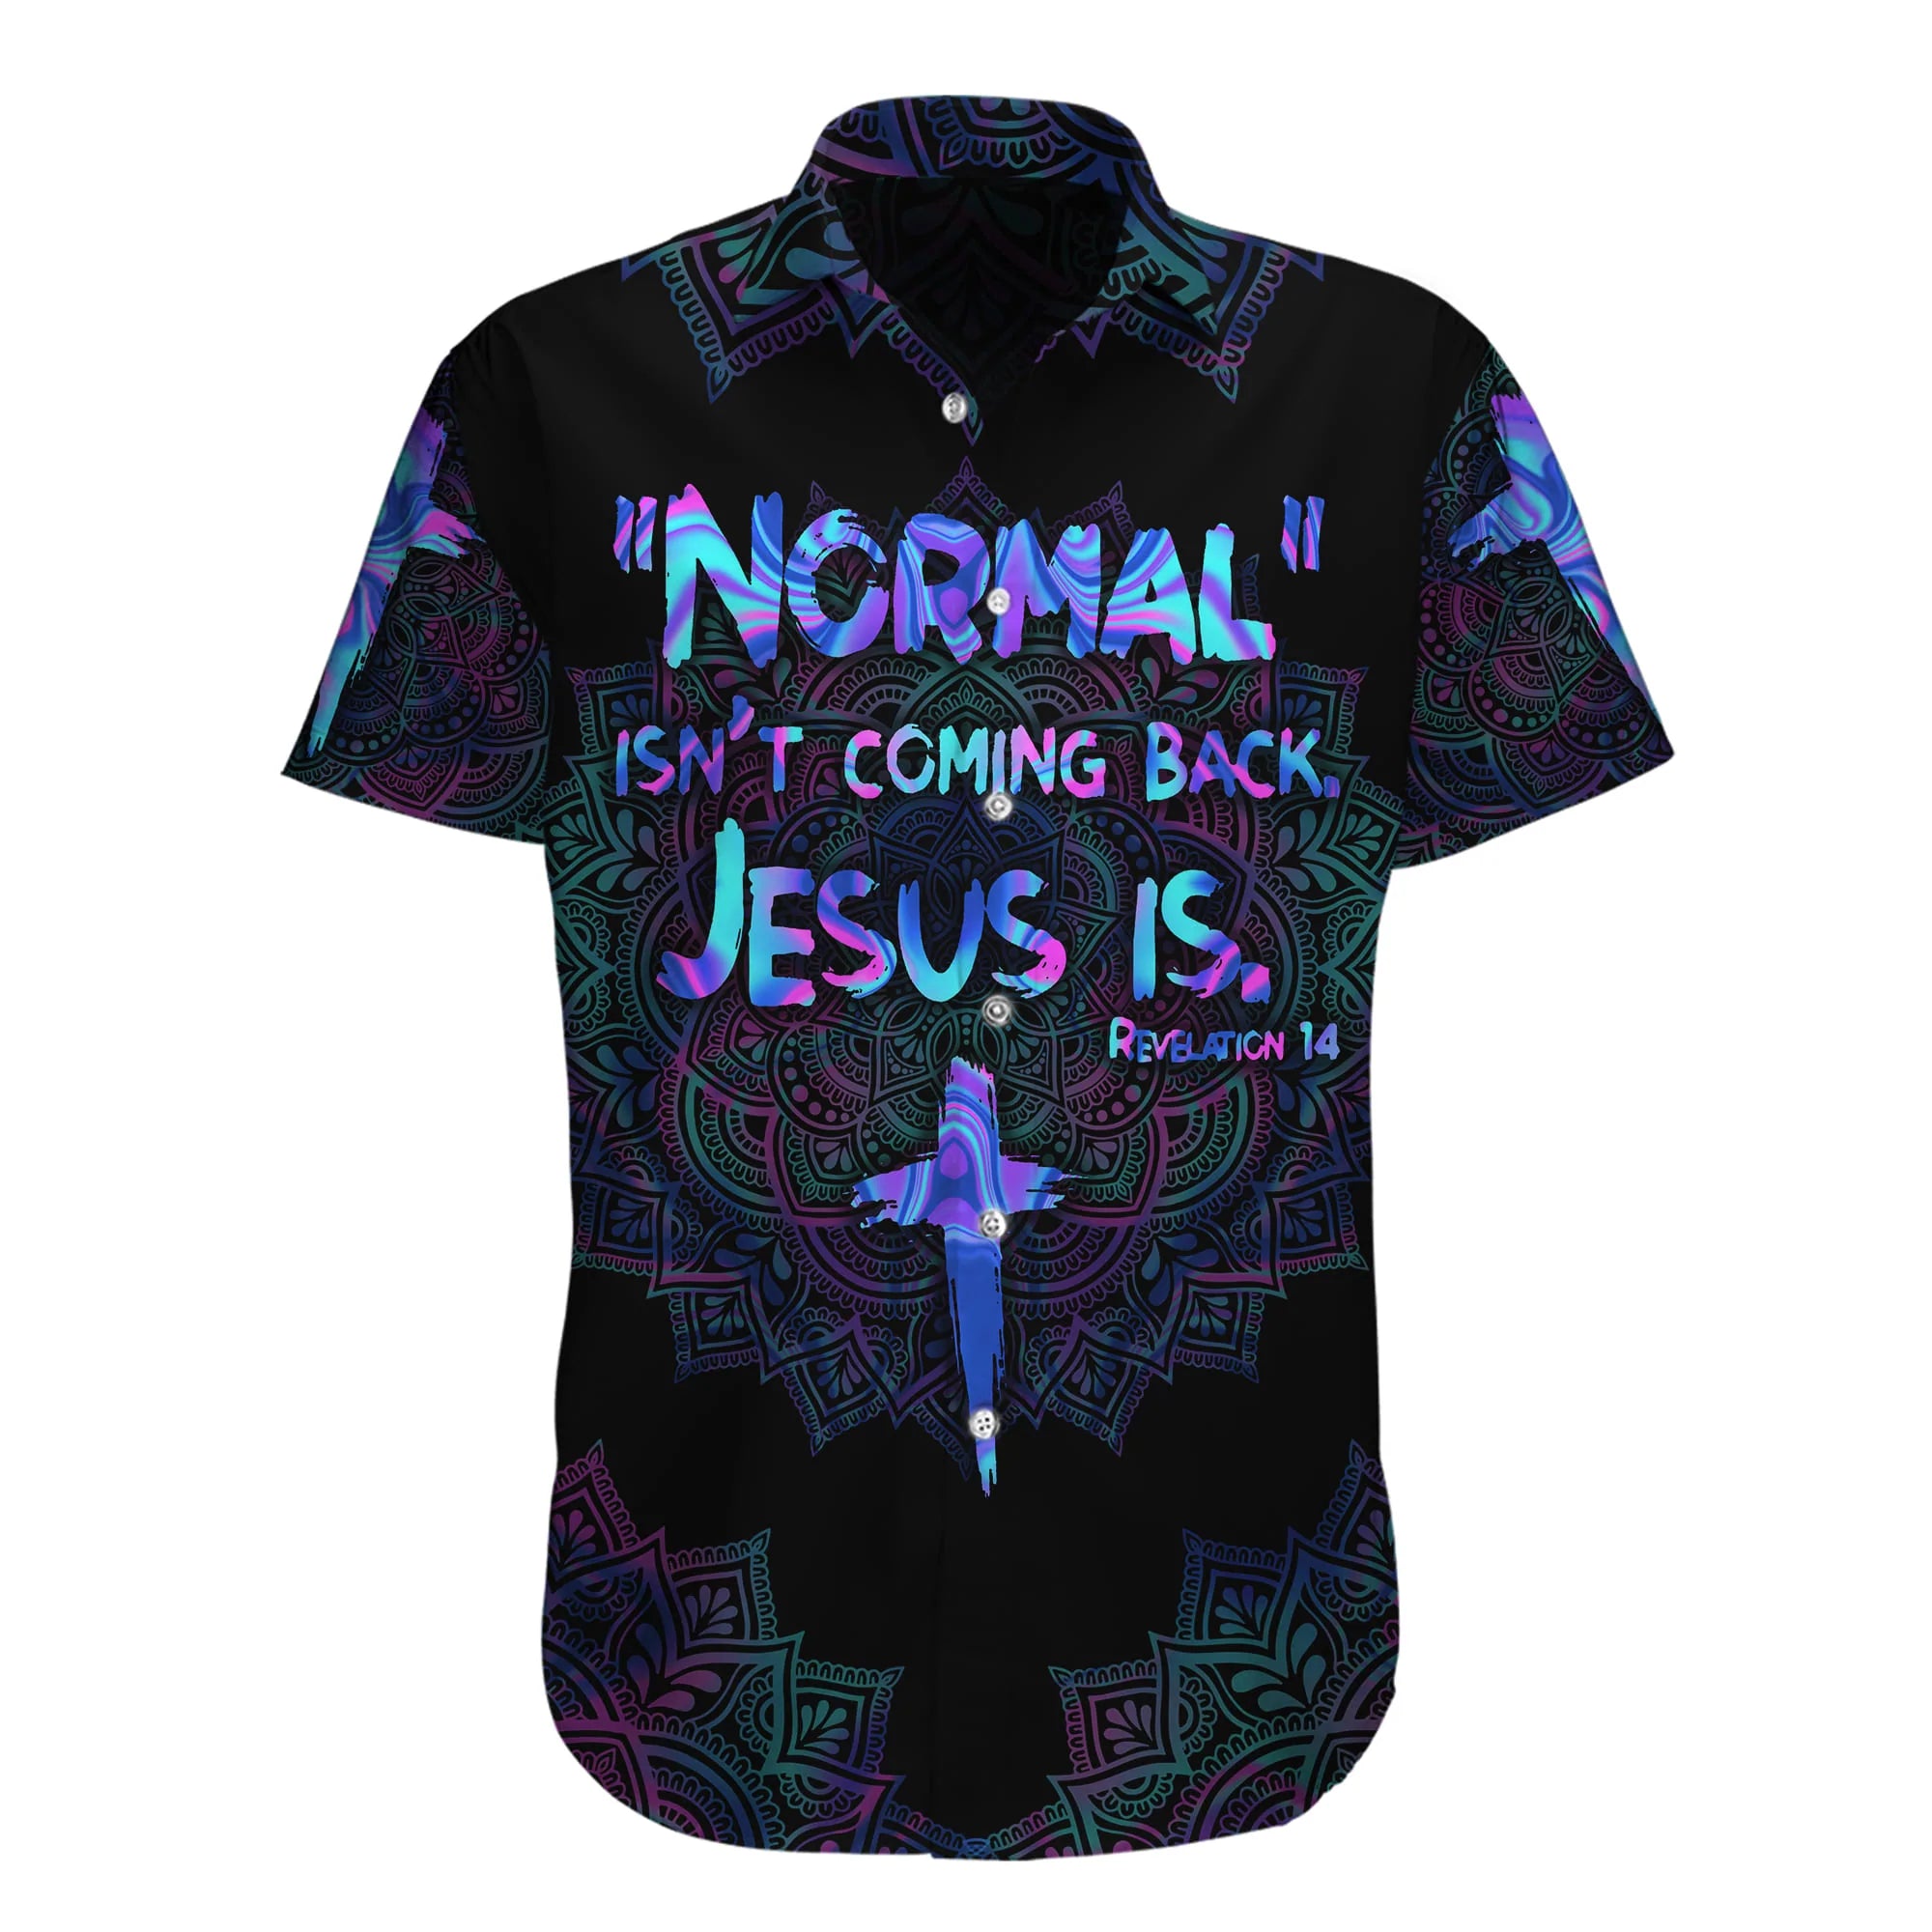 Normal isn't Coming Back Jesus Is Revelation 14 Printed 3D Hawaiian Shirt for Men and Women